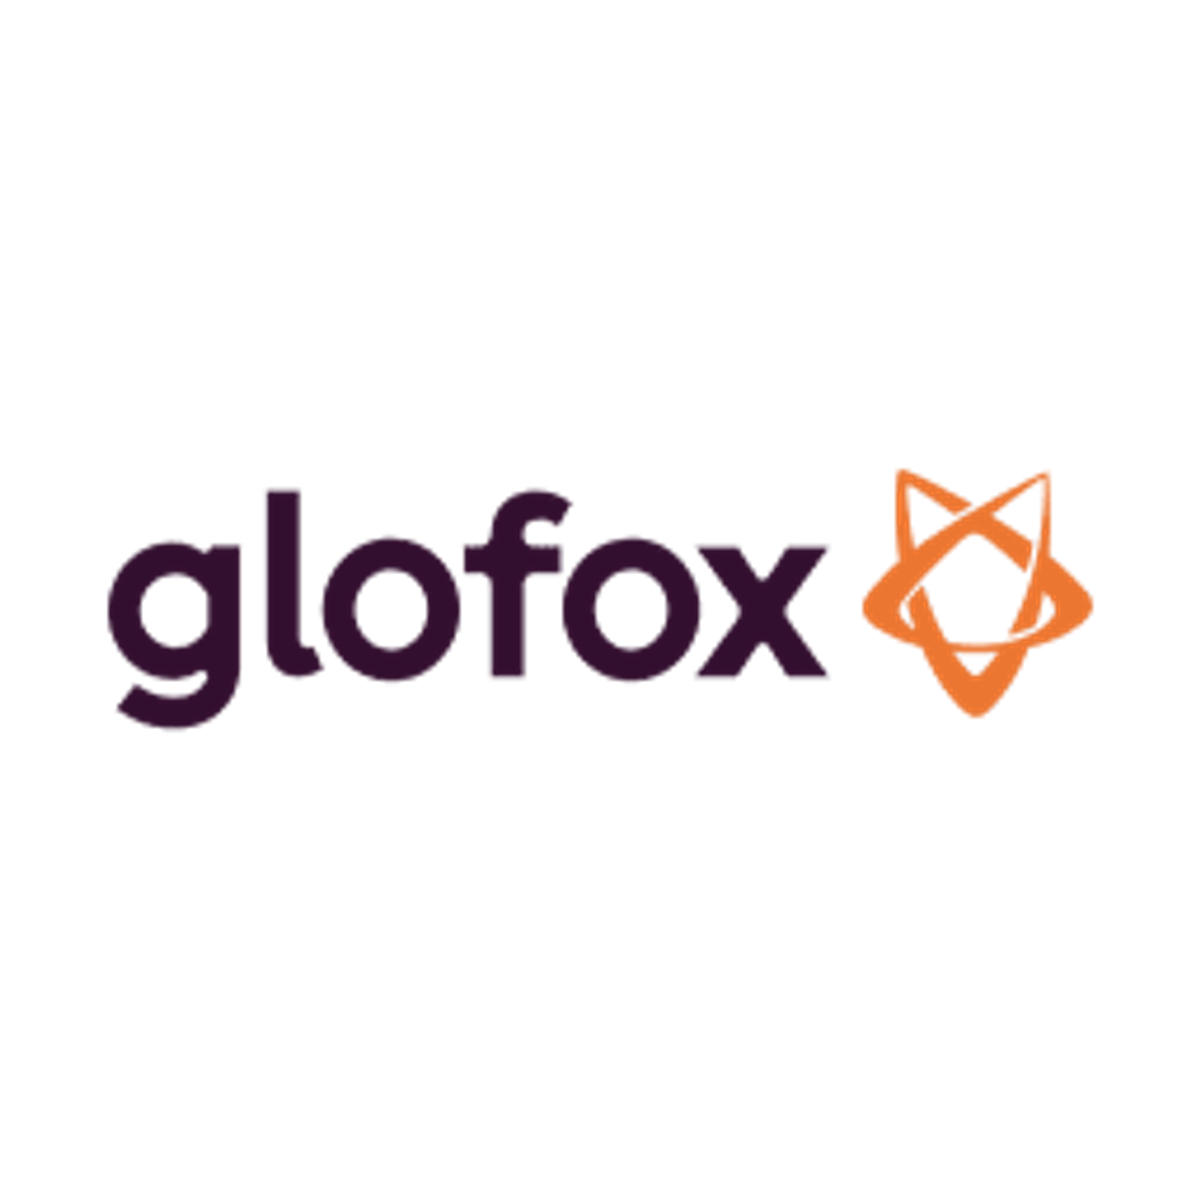 Glofox